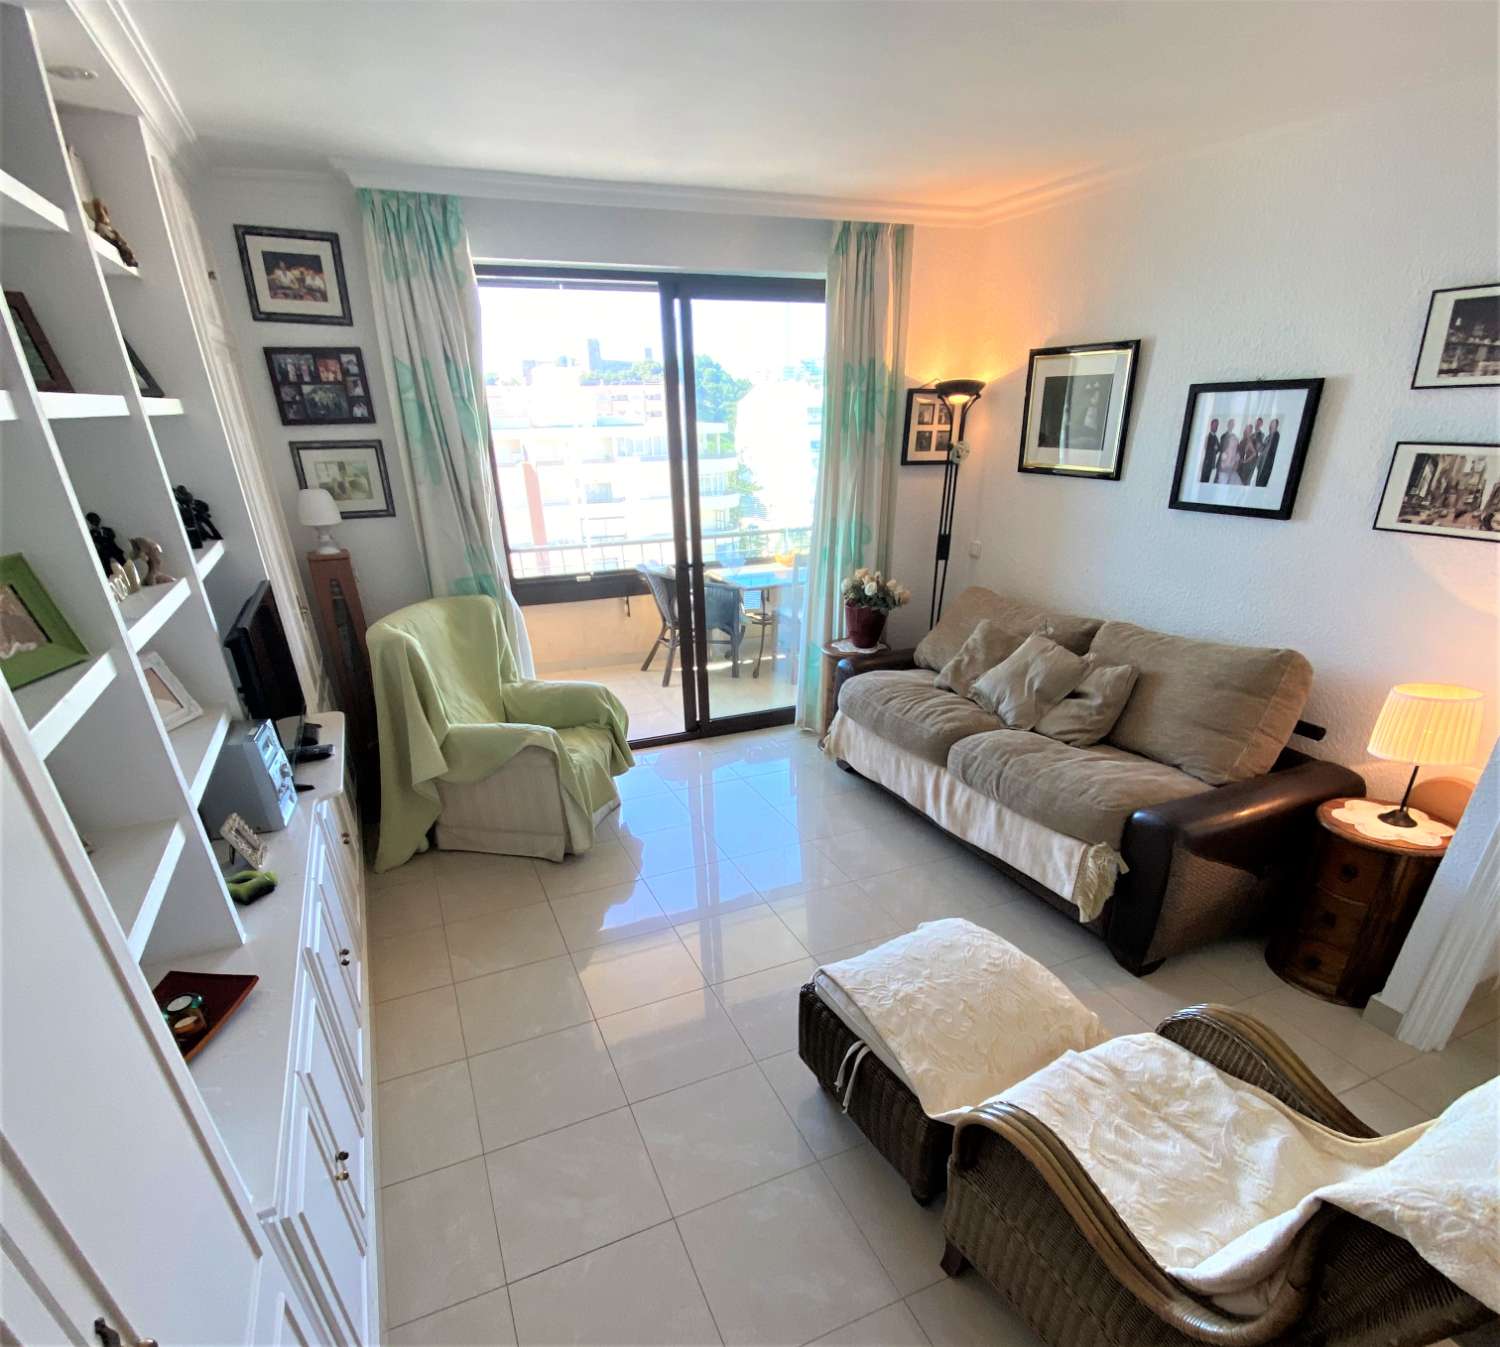 Fuengirola, 1 bedroom, panoramic views, Free Wi-Fi, swimming pool, First line beach.